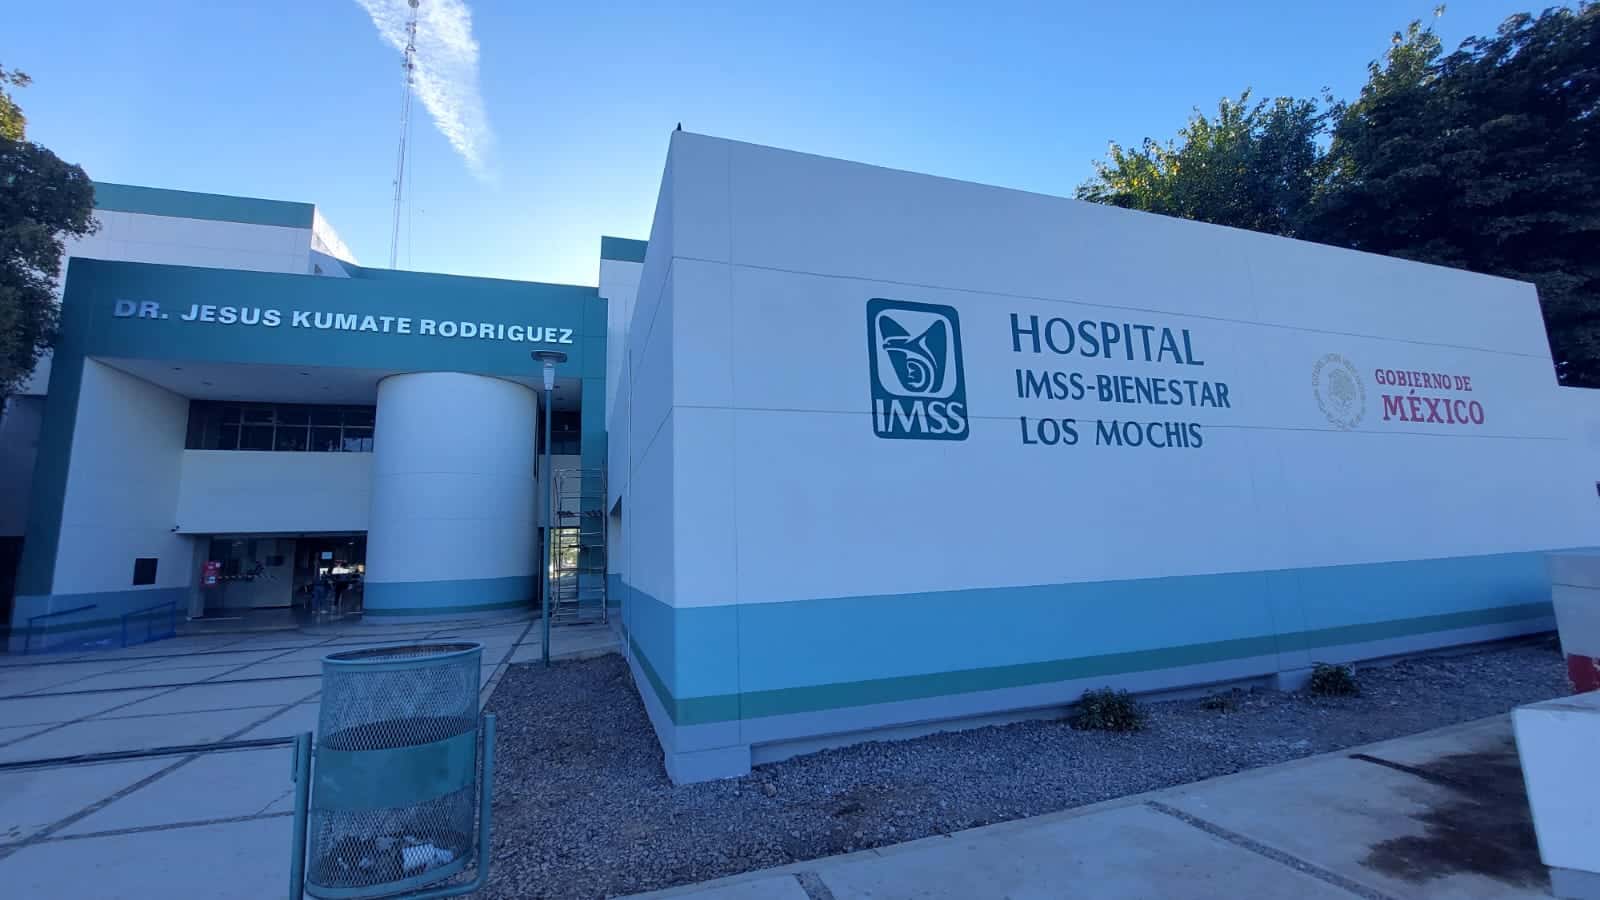 Hospital IMSS Bienestar Los Mochis HG Jesús Kumate